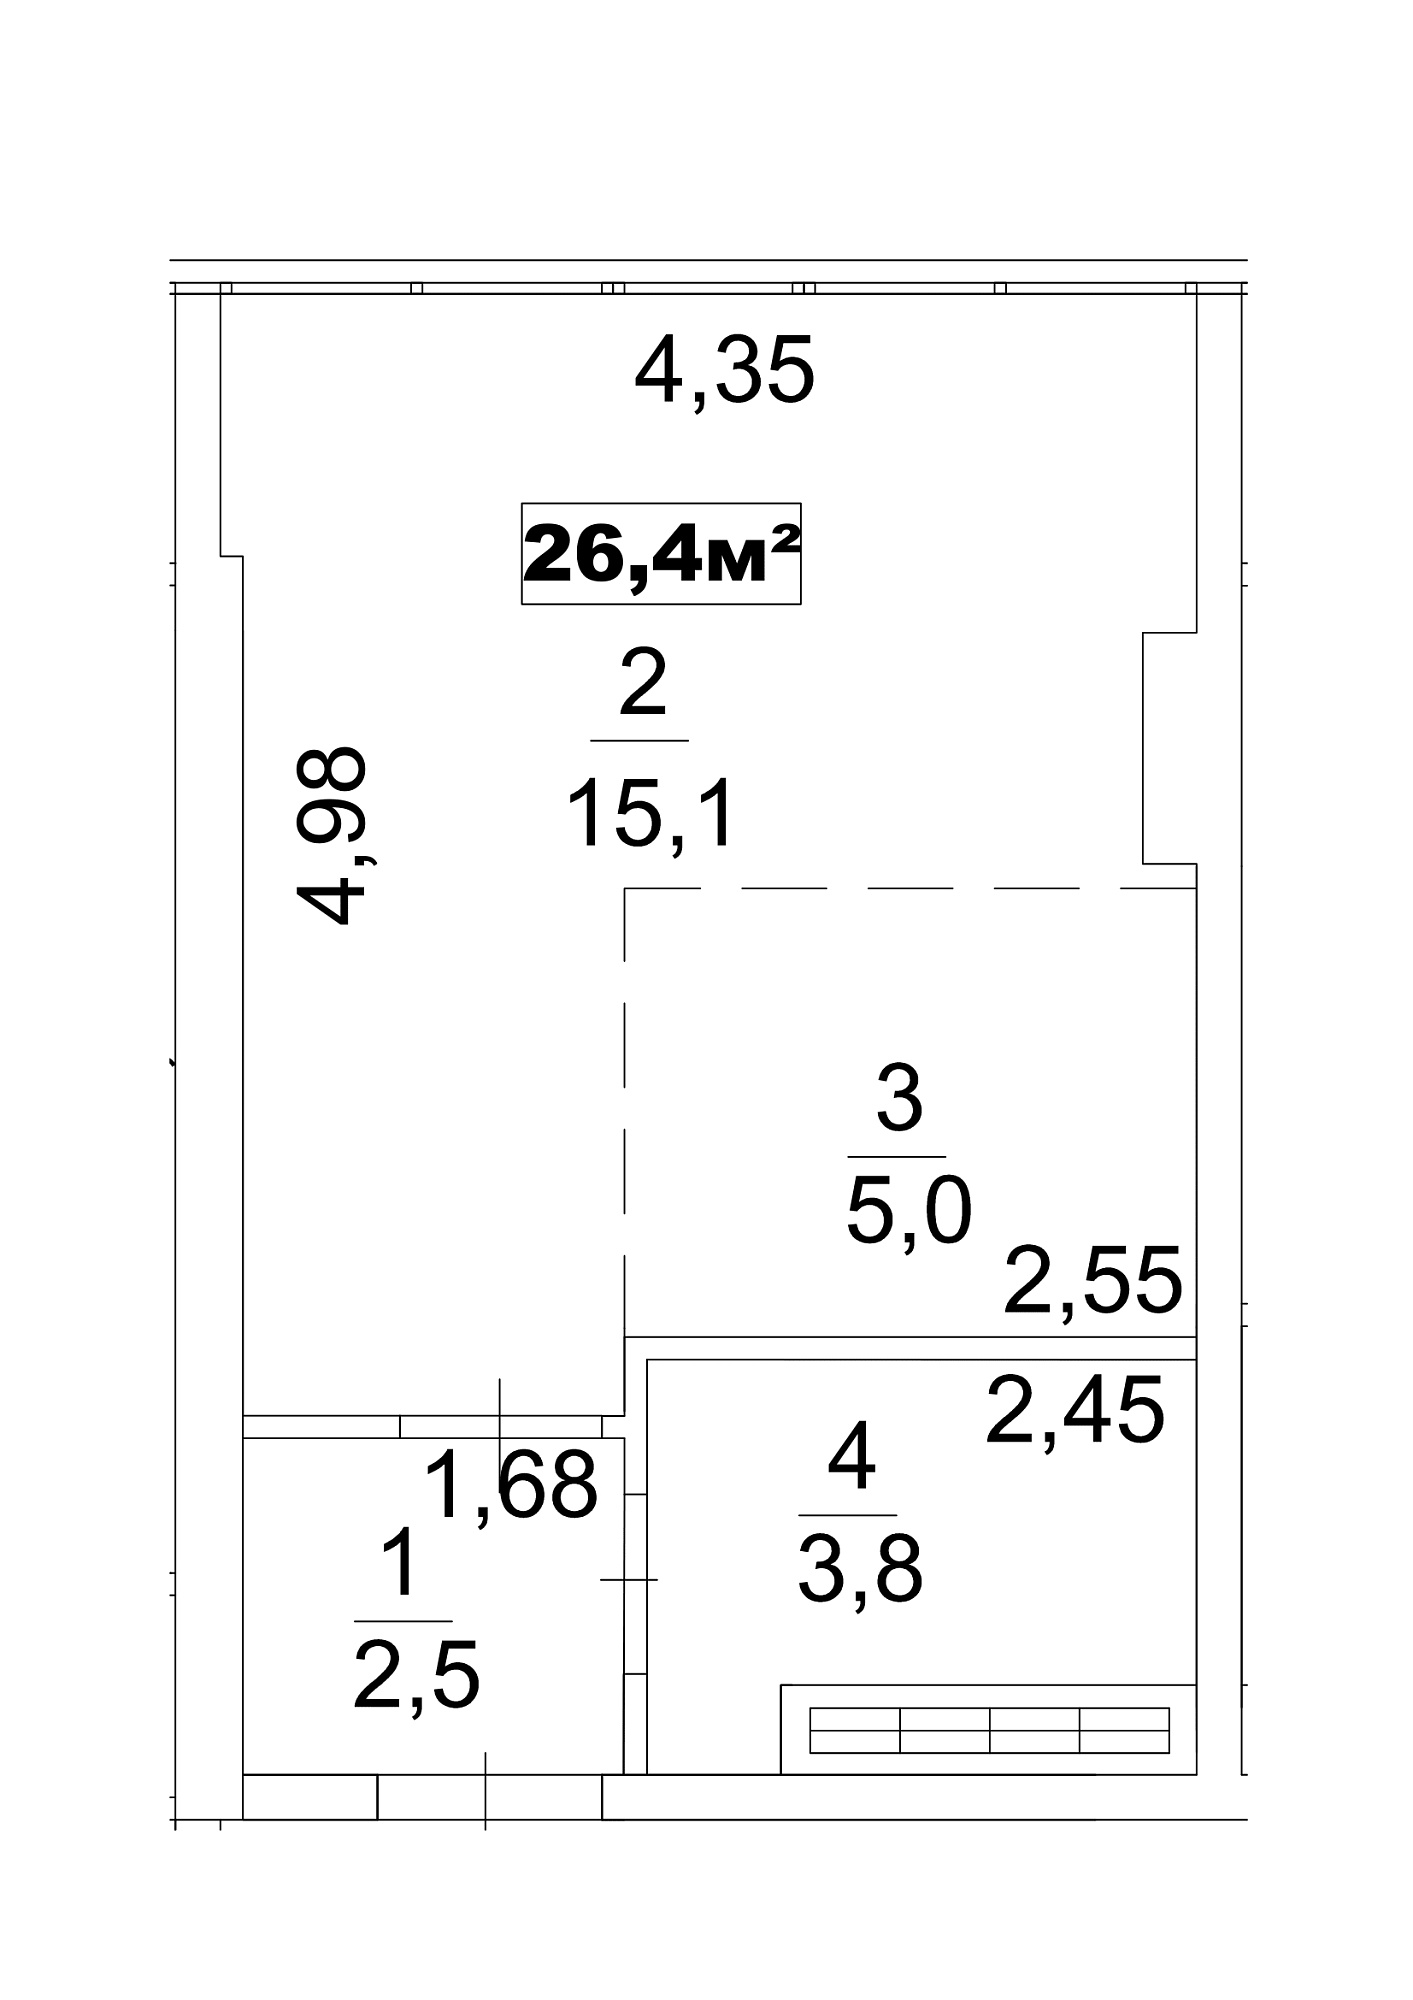 Планировка Smart-квартира площей 26.4м2, AB-13-01/0003д.